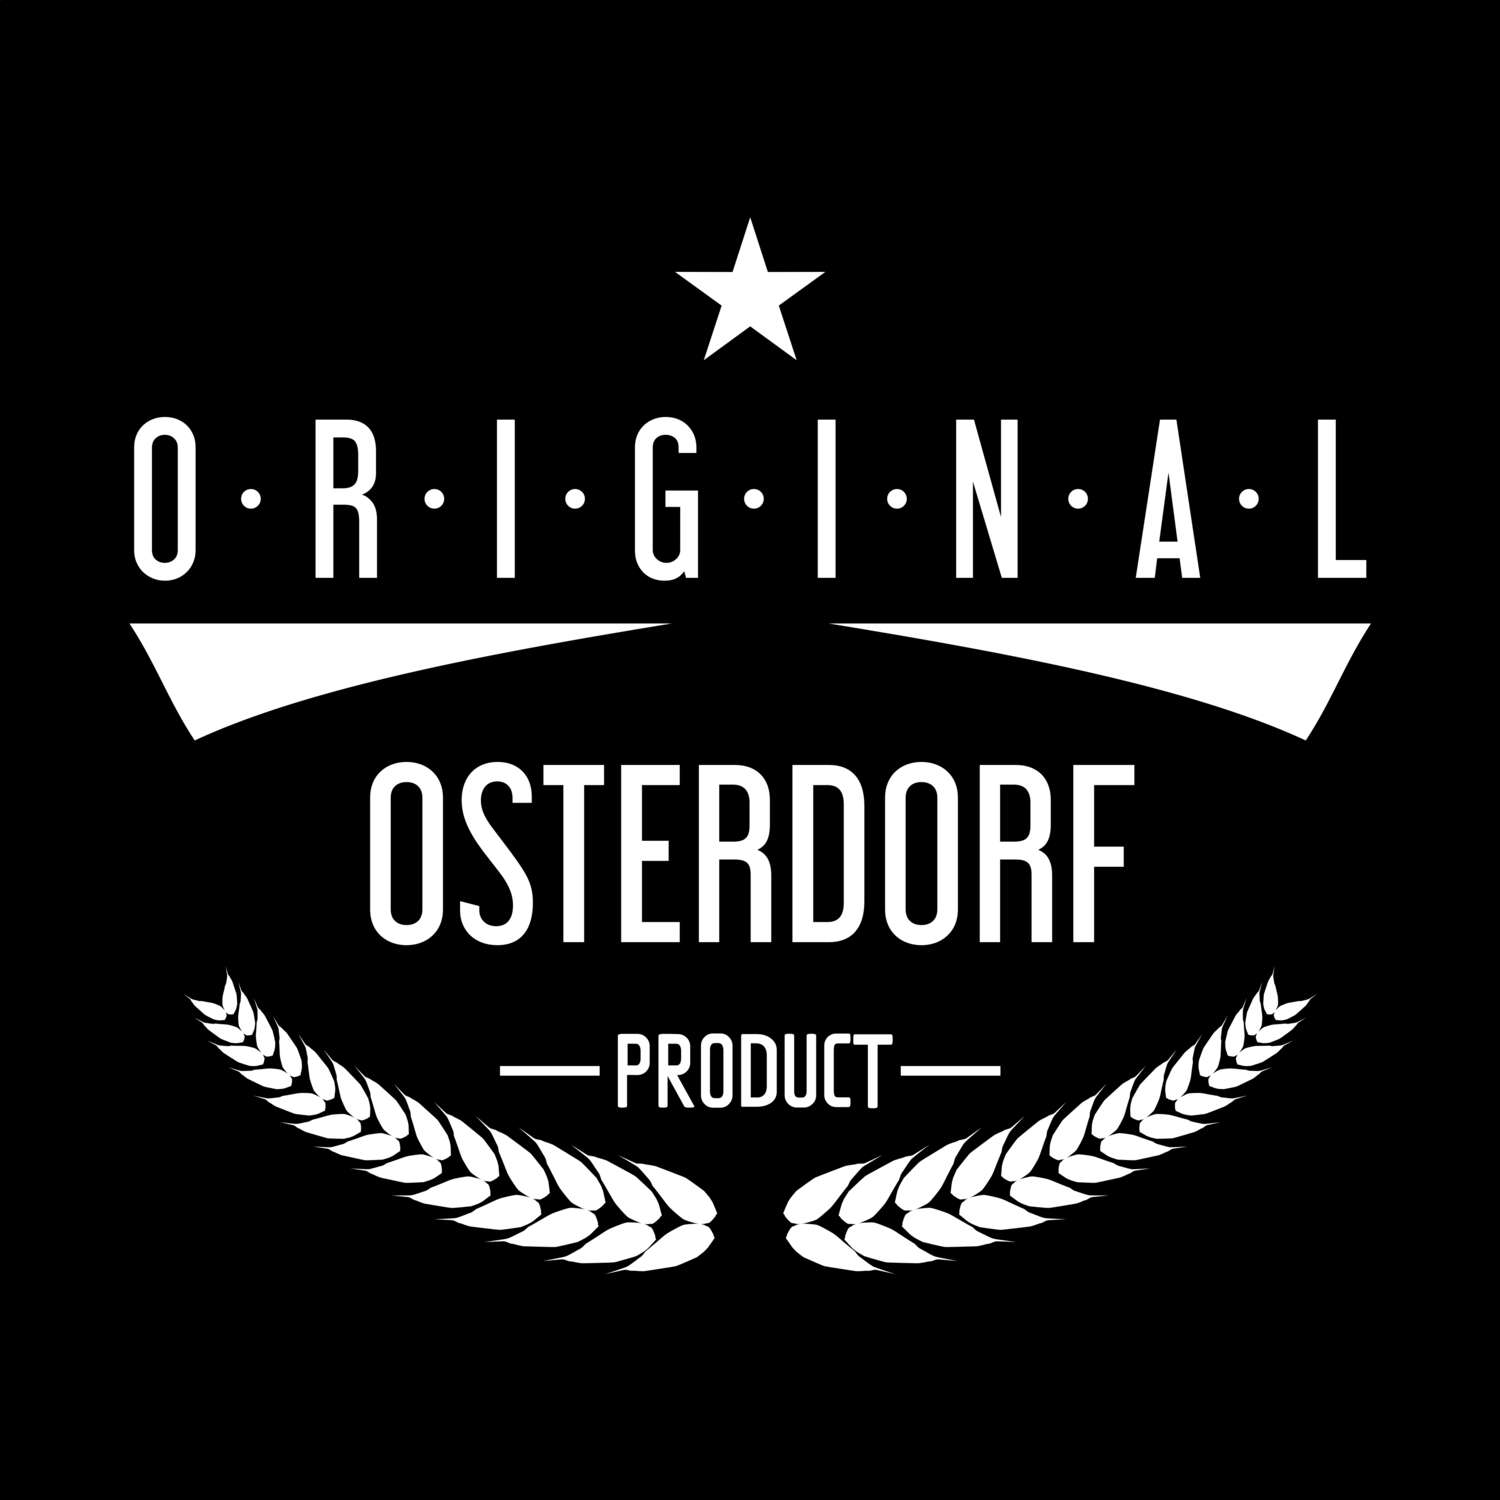 Osterdorf T-Shirt »Original Product«